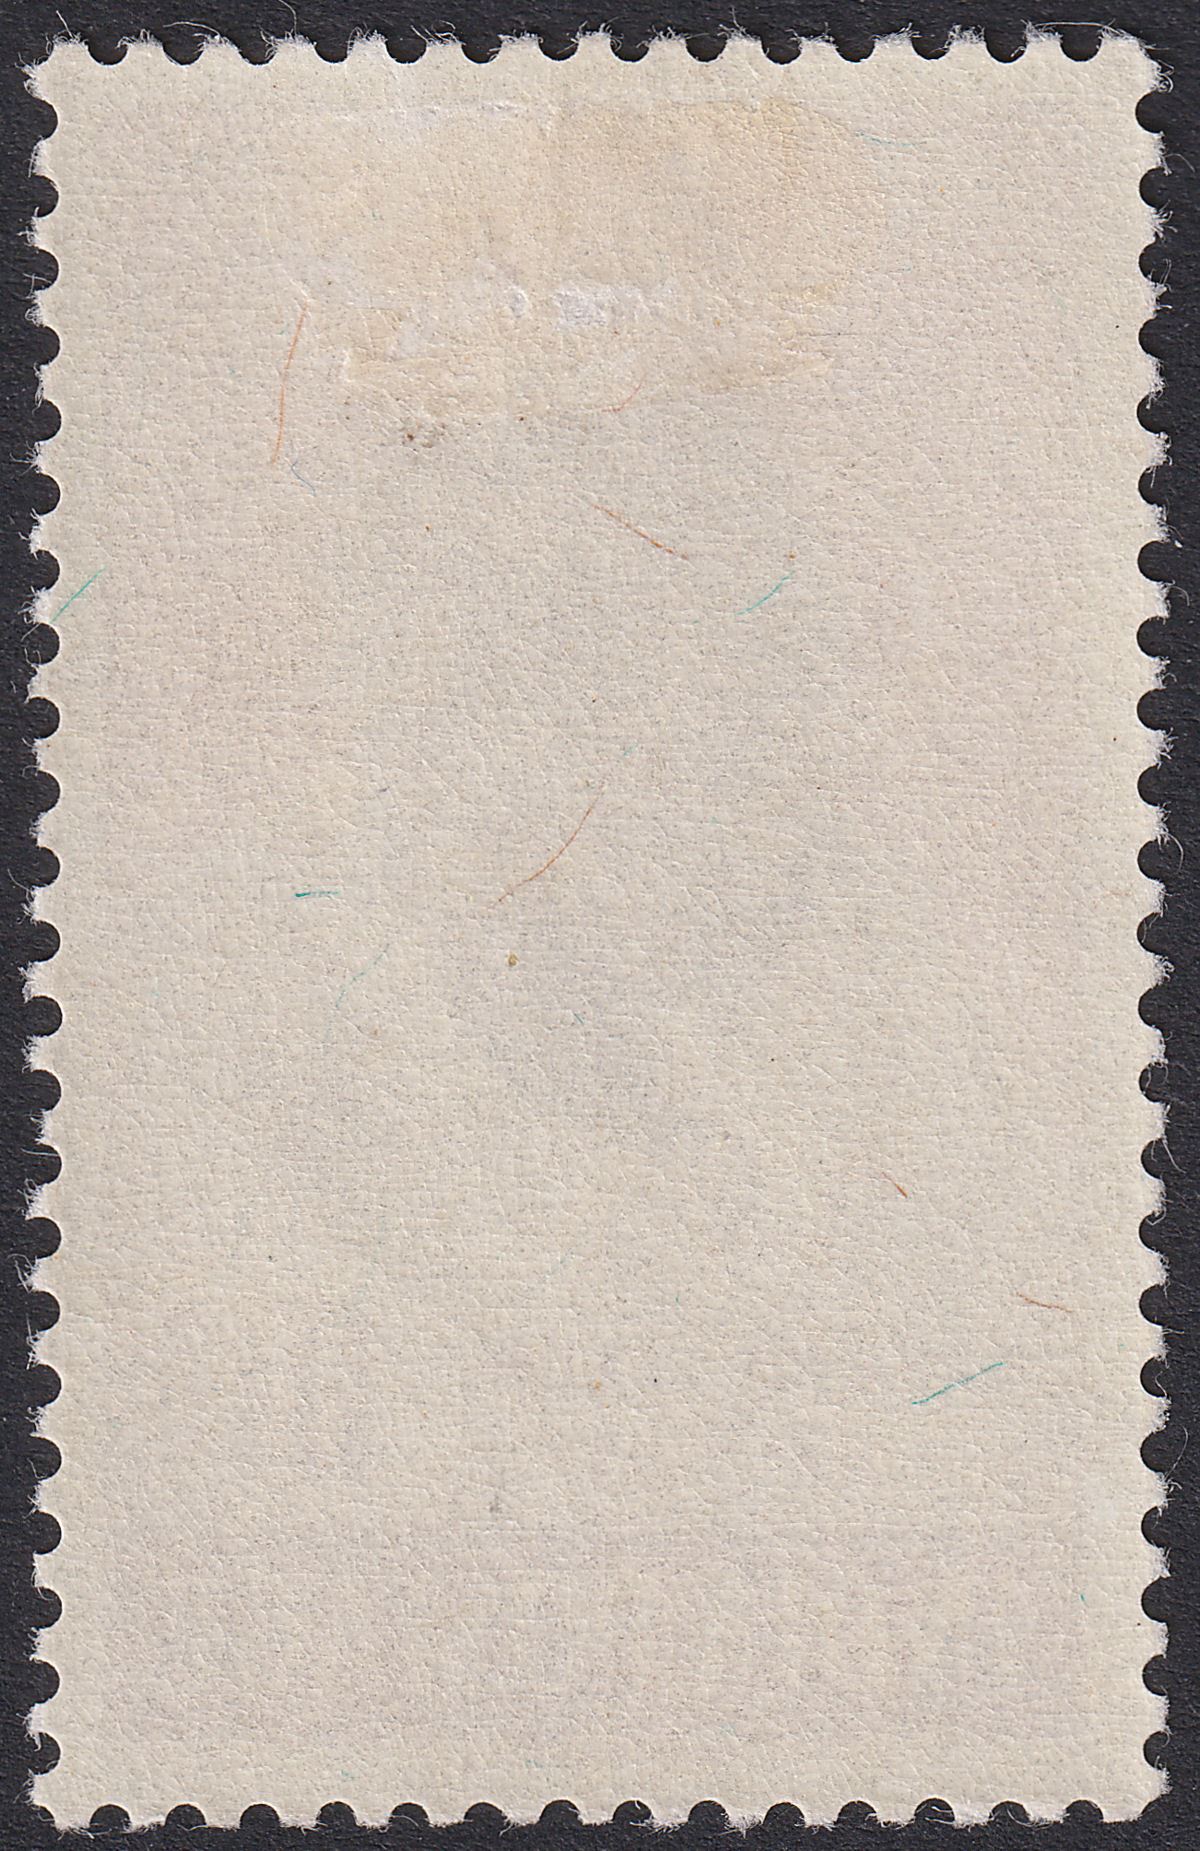 India 1948 Gandhi Independence 10r Mint SG308 cat £400